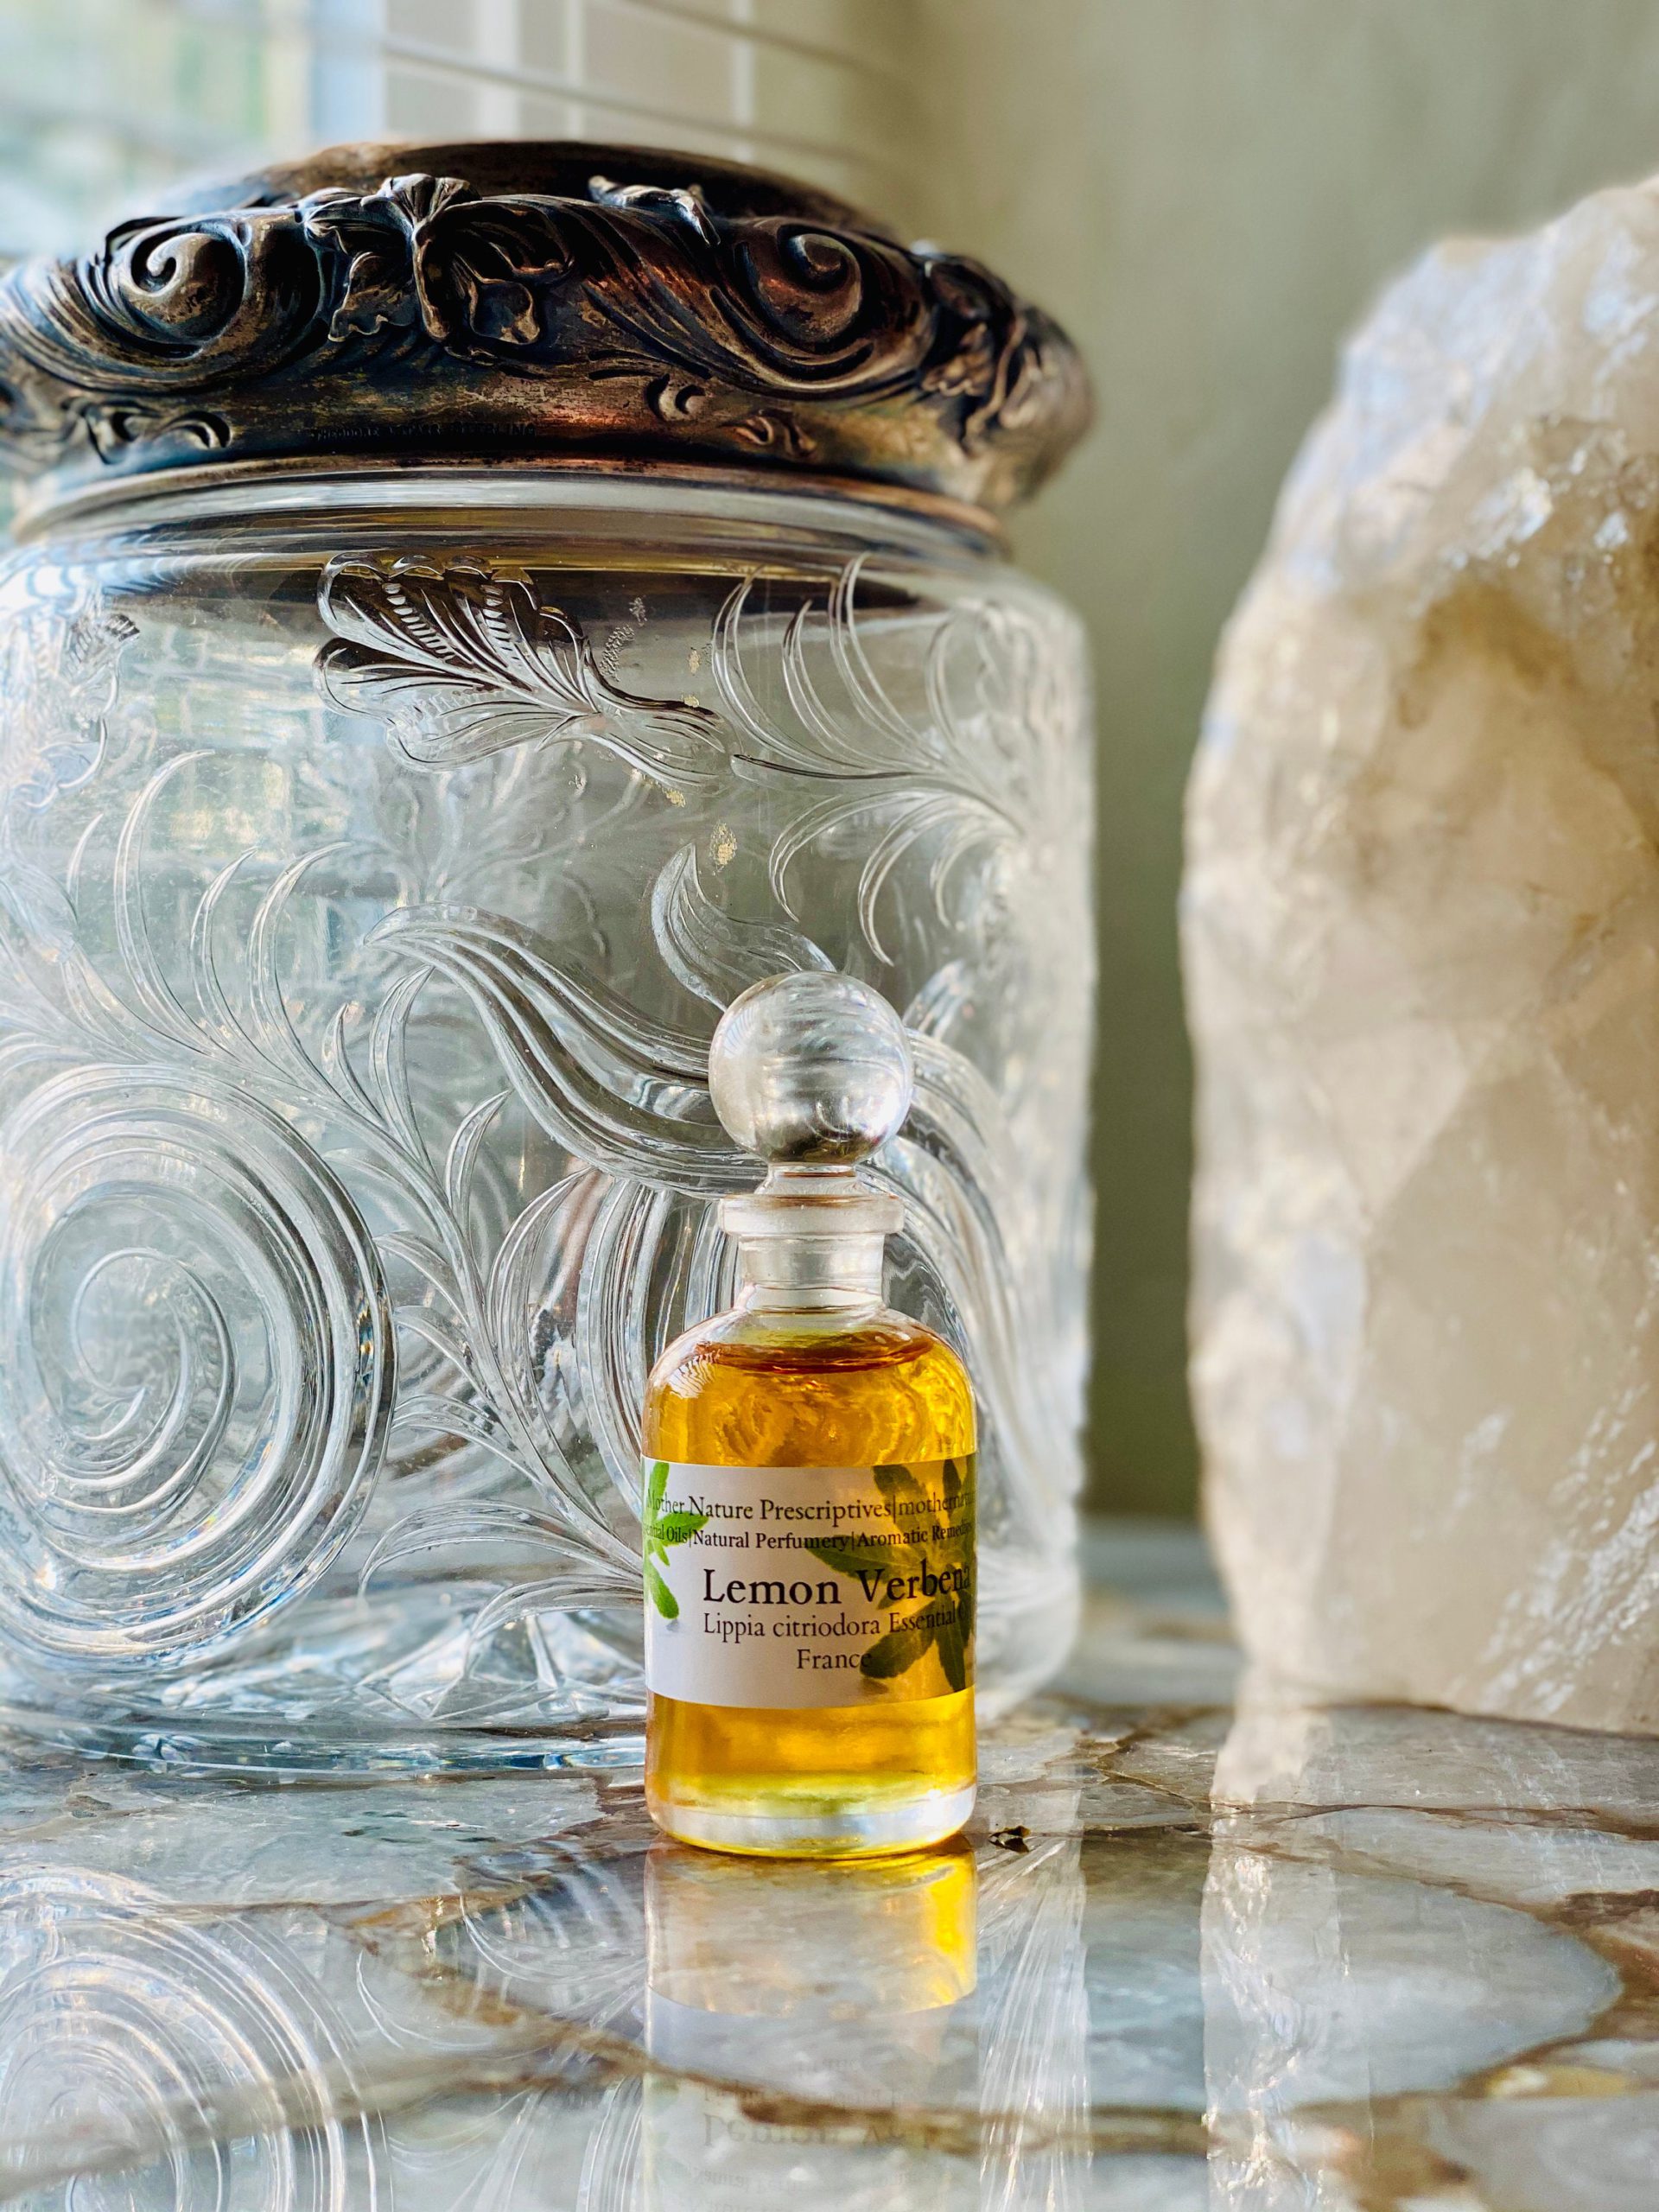 Lemon Verbena 10ml - Shop Amour Essential Oil Fragrances - Pinkoi